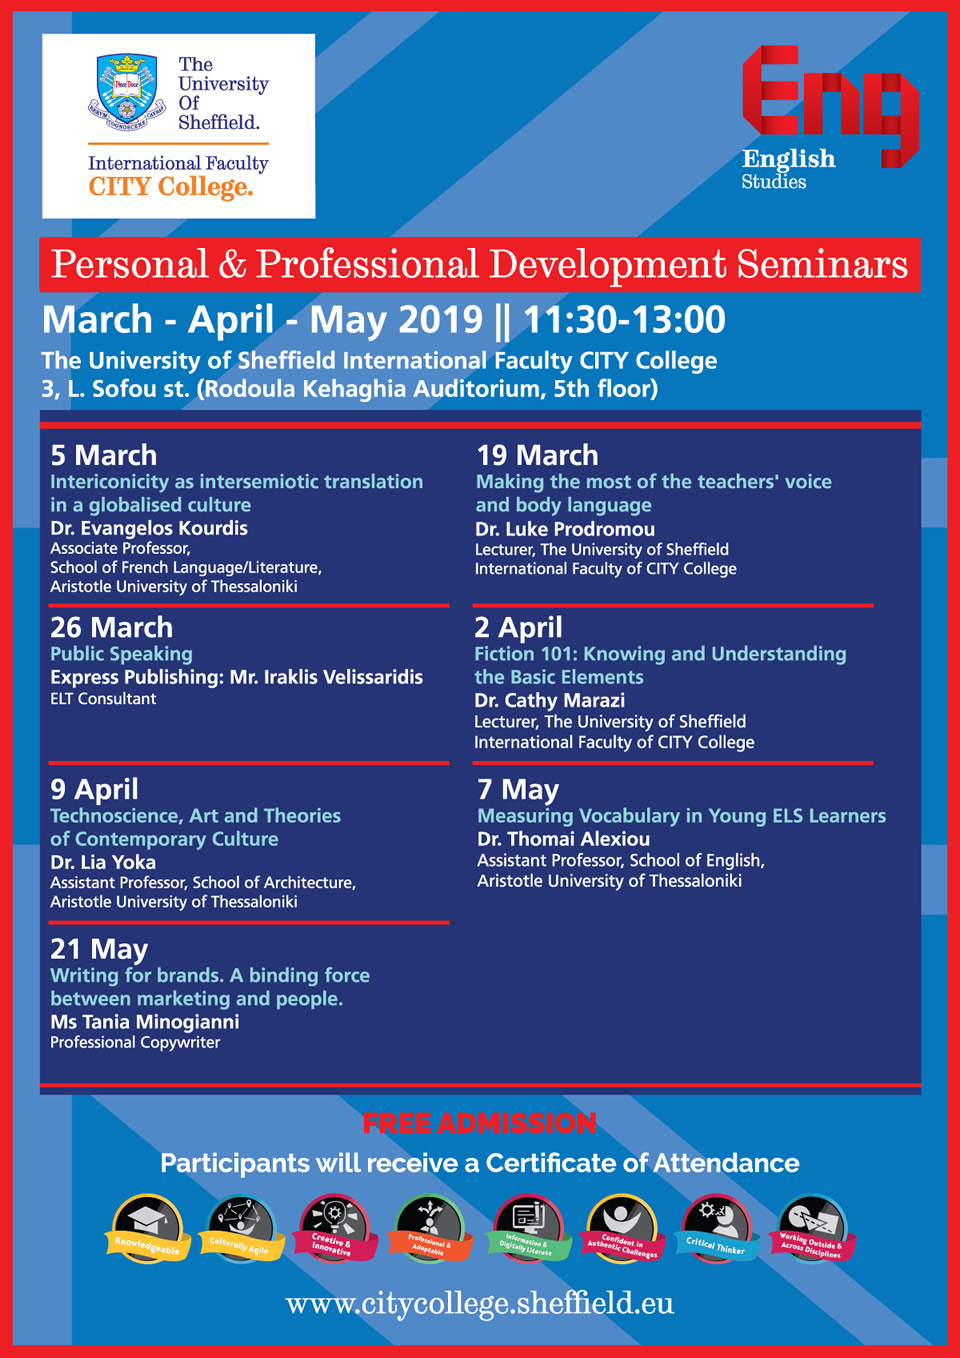 Personal & Professional Development Seminars 2019 by the University of Sheffield International Faculty's English Studies Dept